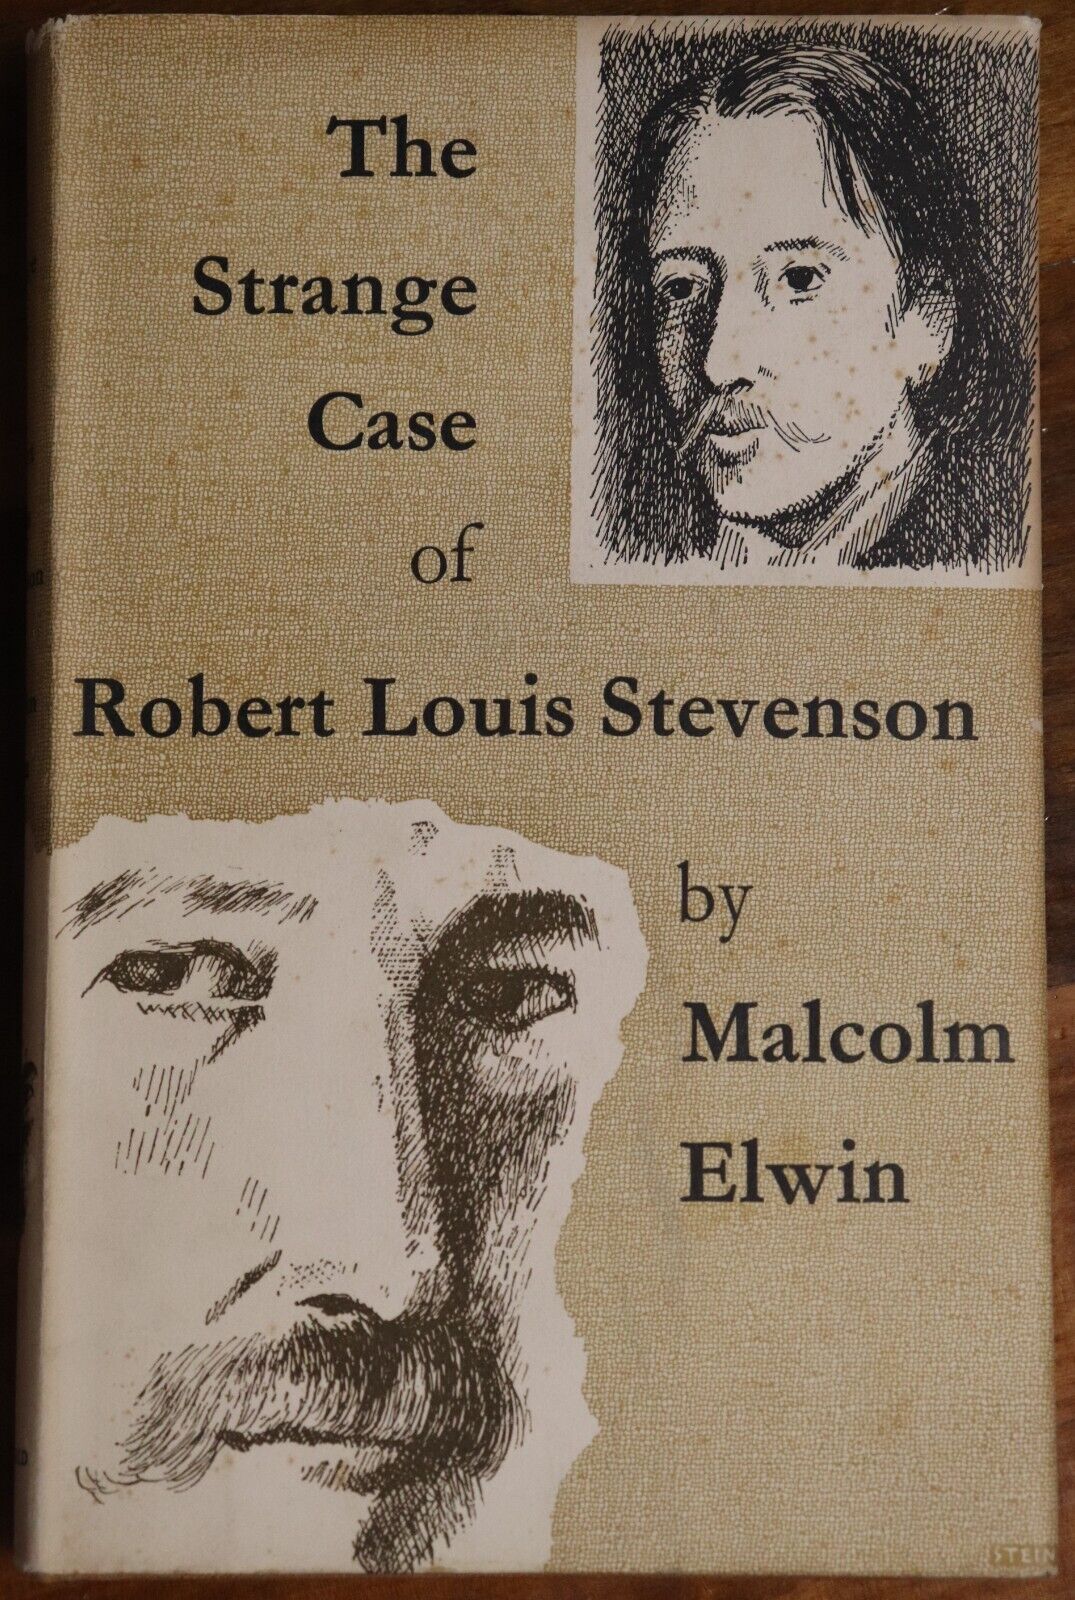 The Strange Case Of Robert Louis Stevenson - 1950 - Biographical History Book